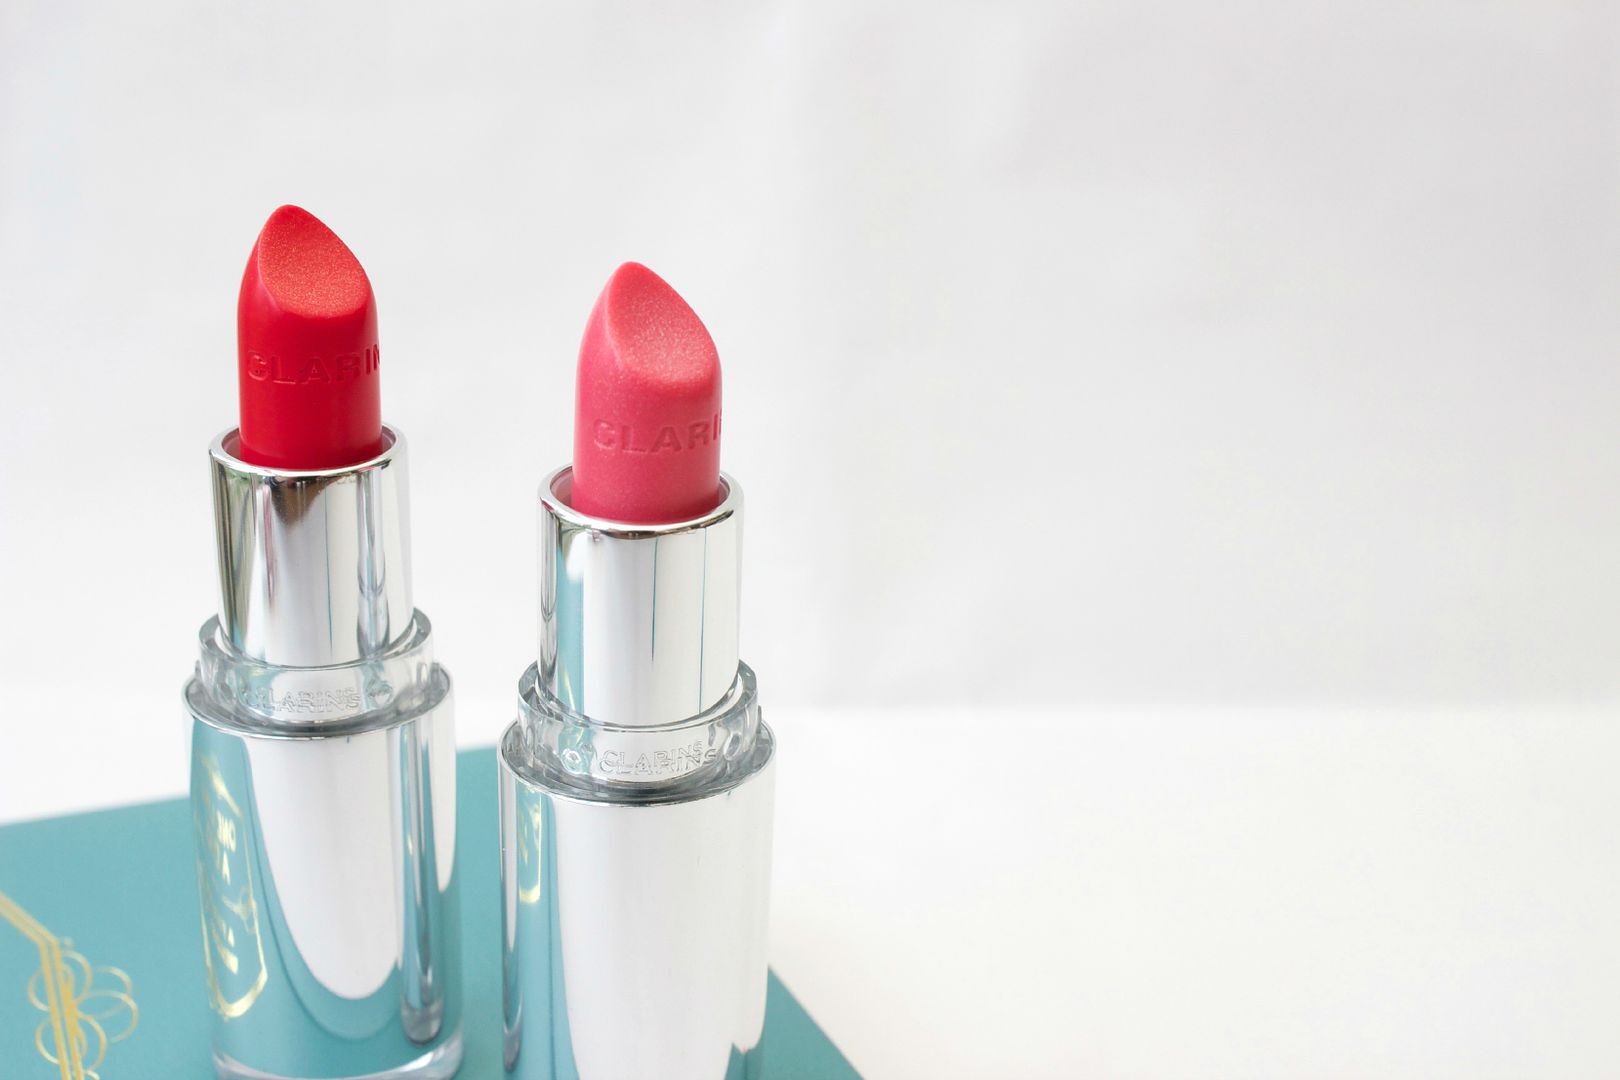 Clarins Garden Escape Spring Collection Joli Rouge Brilliant Sheer Shine Lipsticks